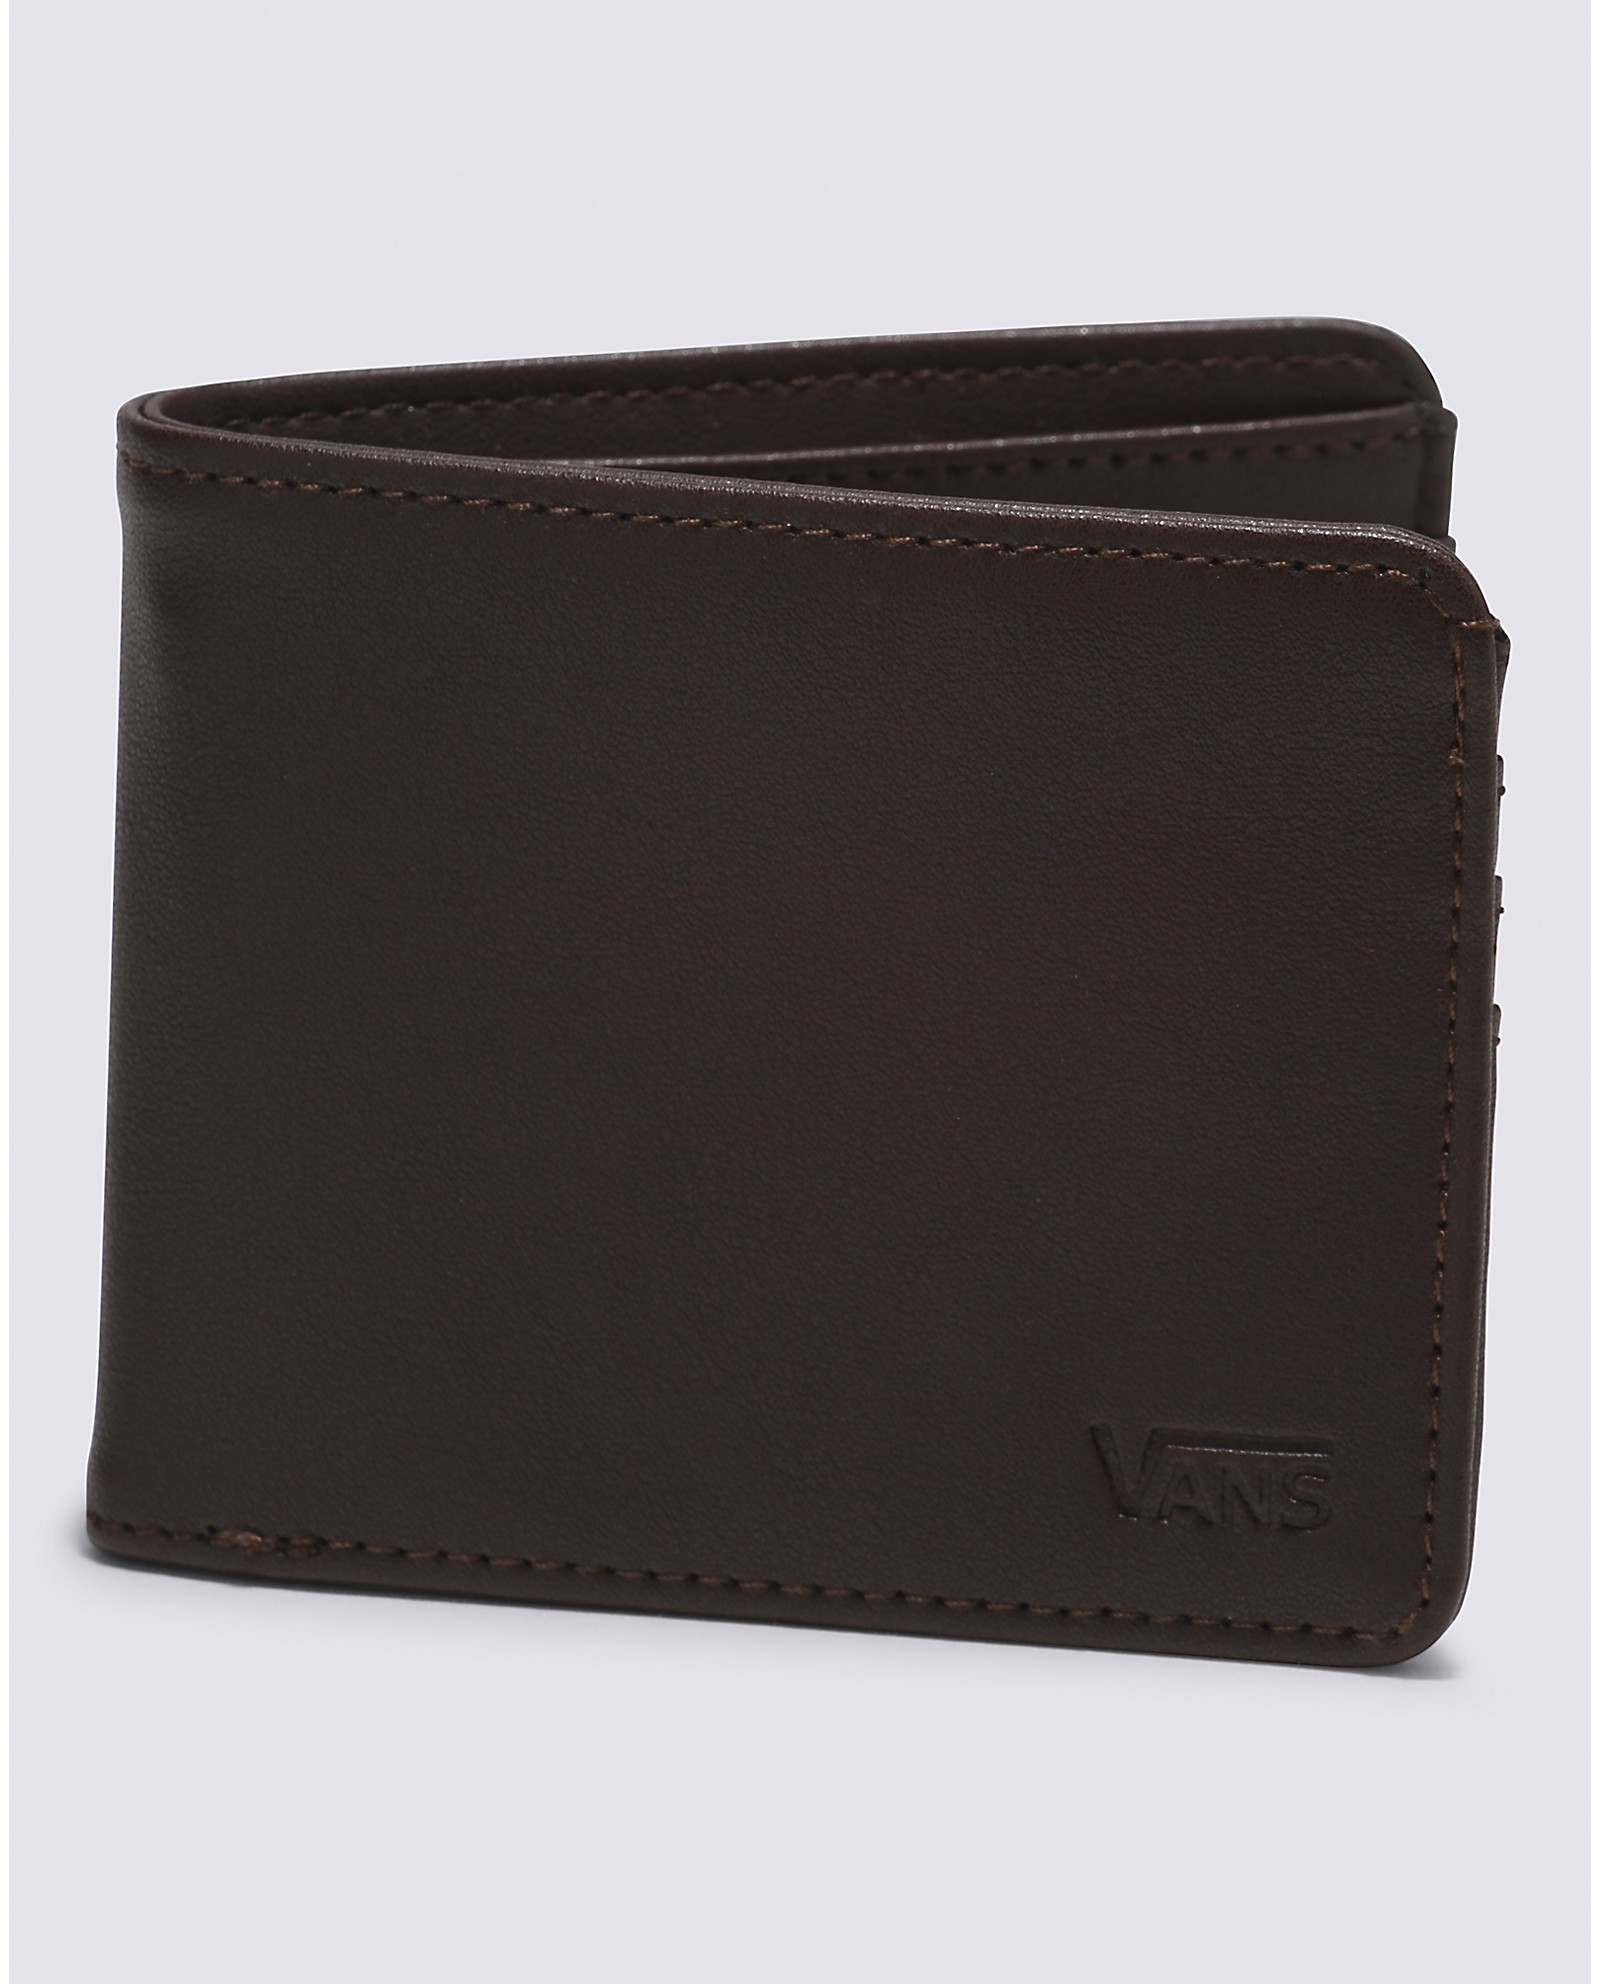 Vans Men's Drop V Bifold Wallet (Dark Brown) $4.95 + Free Shipping